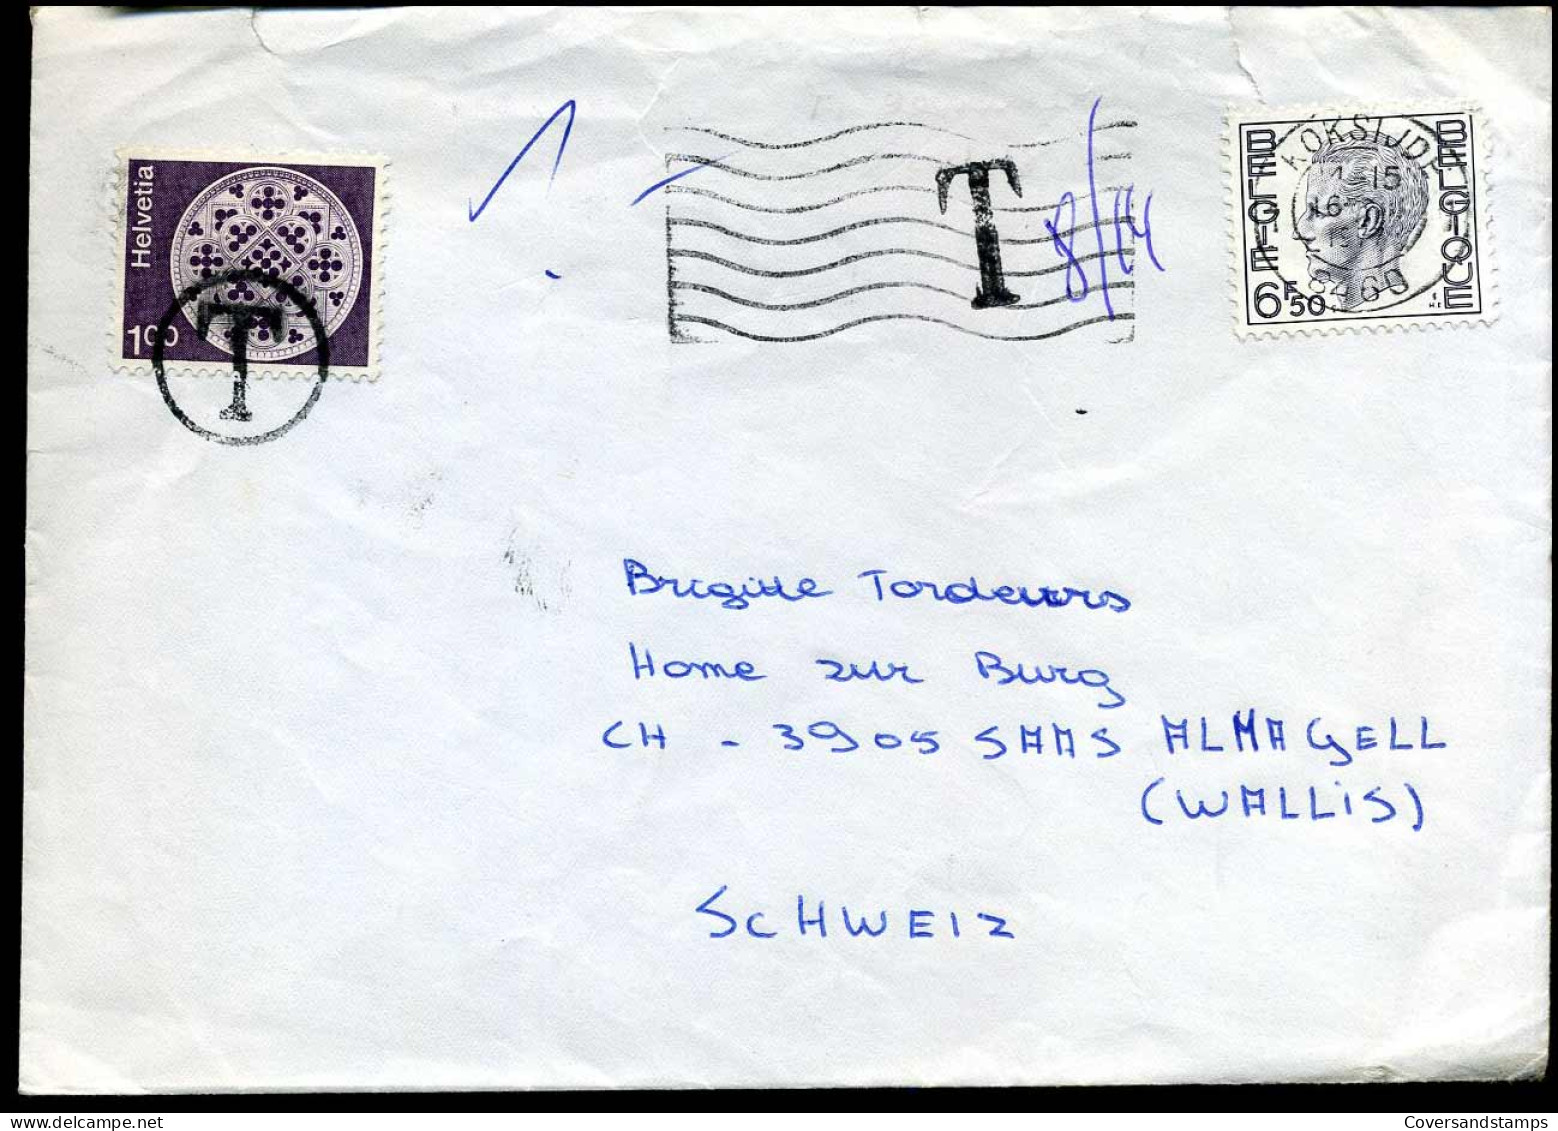 Cover From Koksijde, Belgium - Taxe - Postage Due